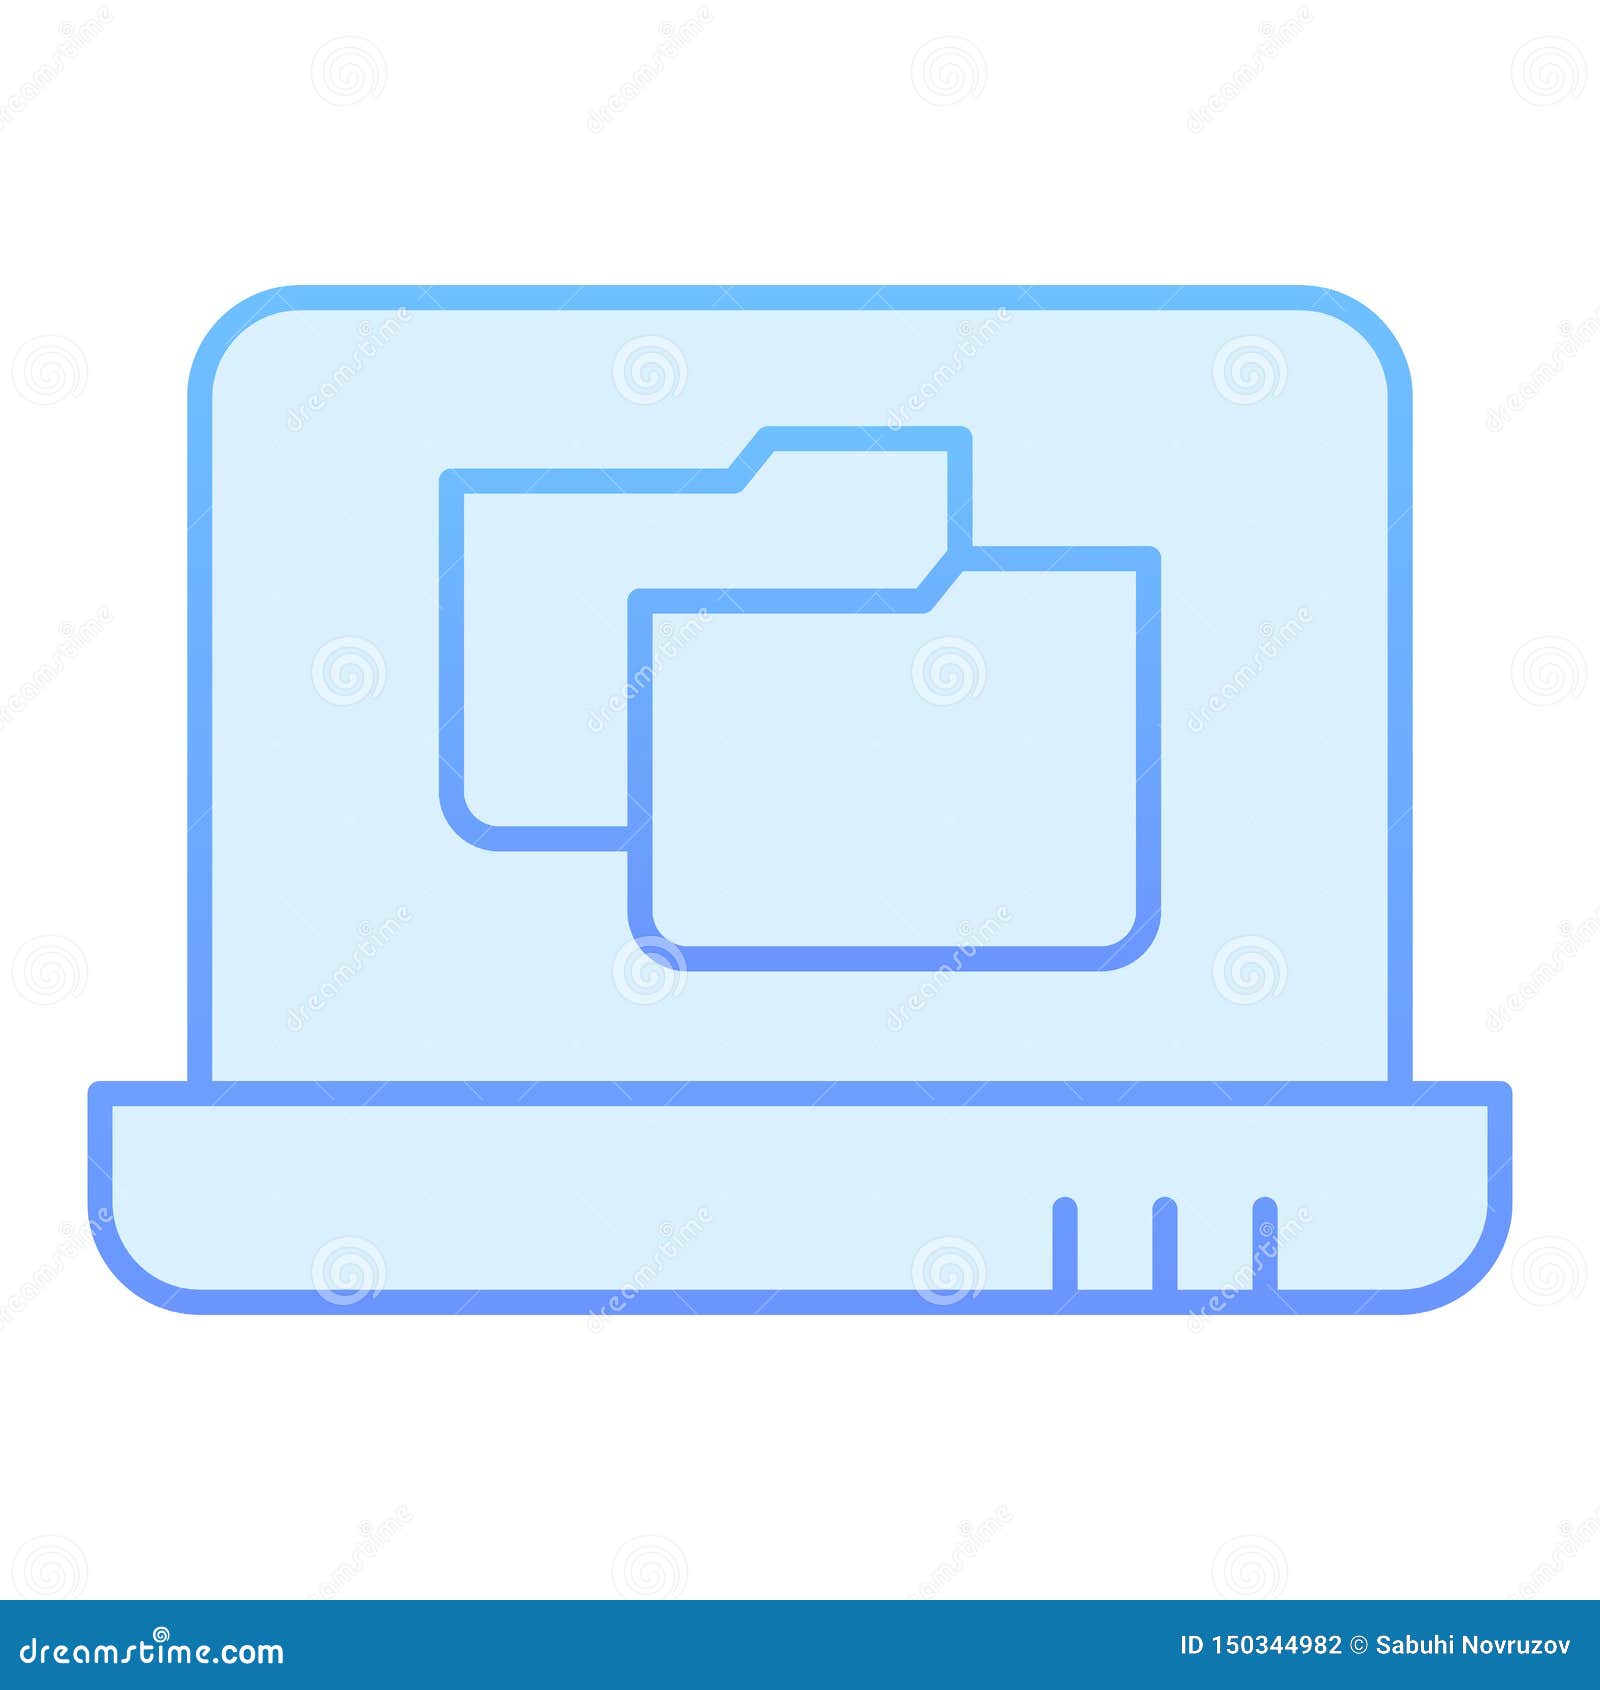 Laptop Folder Flat Icon. Folder on Notebook Blue Icons in Trendy Flat Style. Computer Folder Gradient Style Design Stock Vector - Illustration of silhouette, design: 150344982